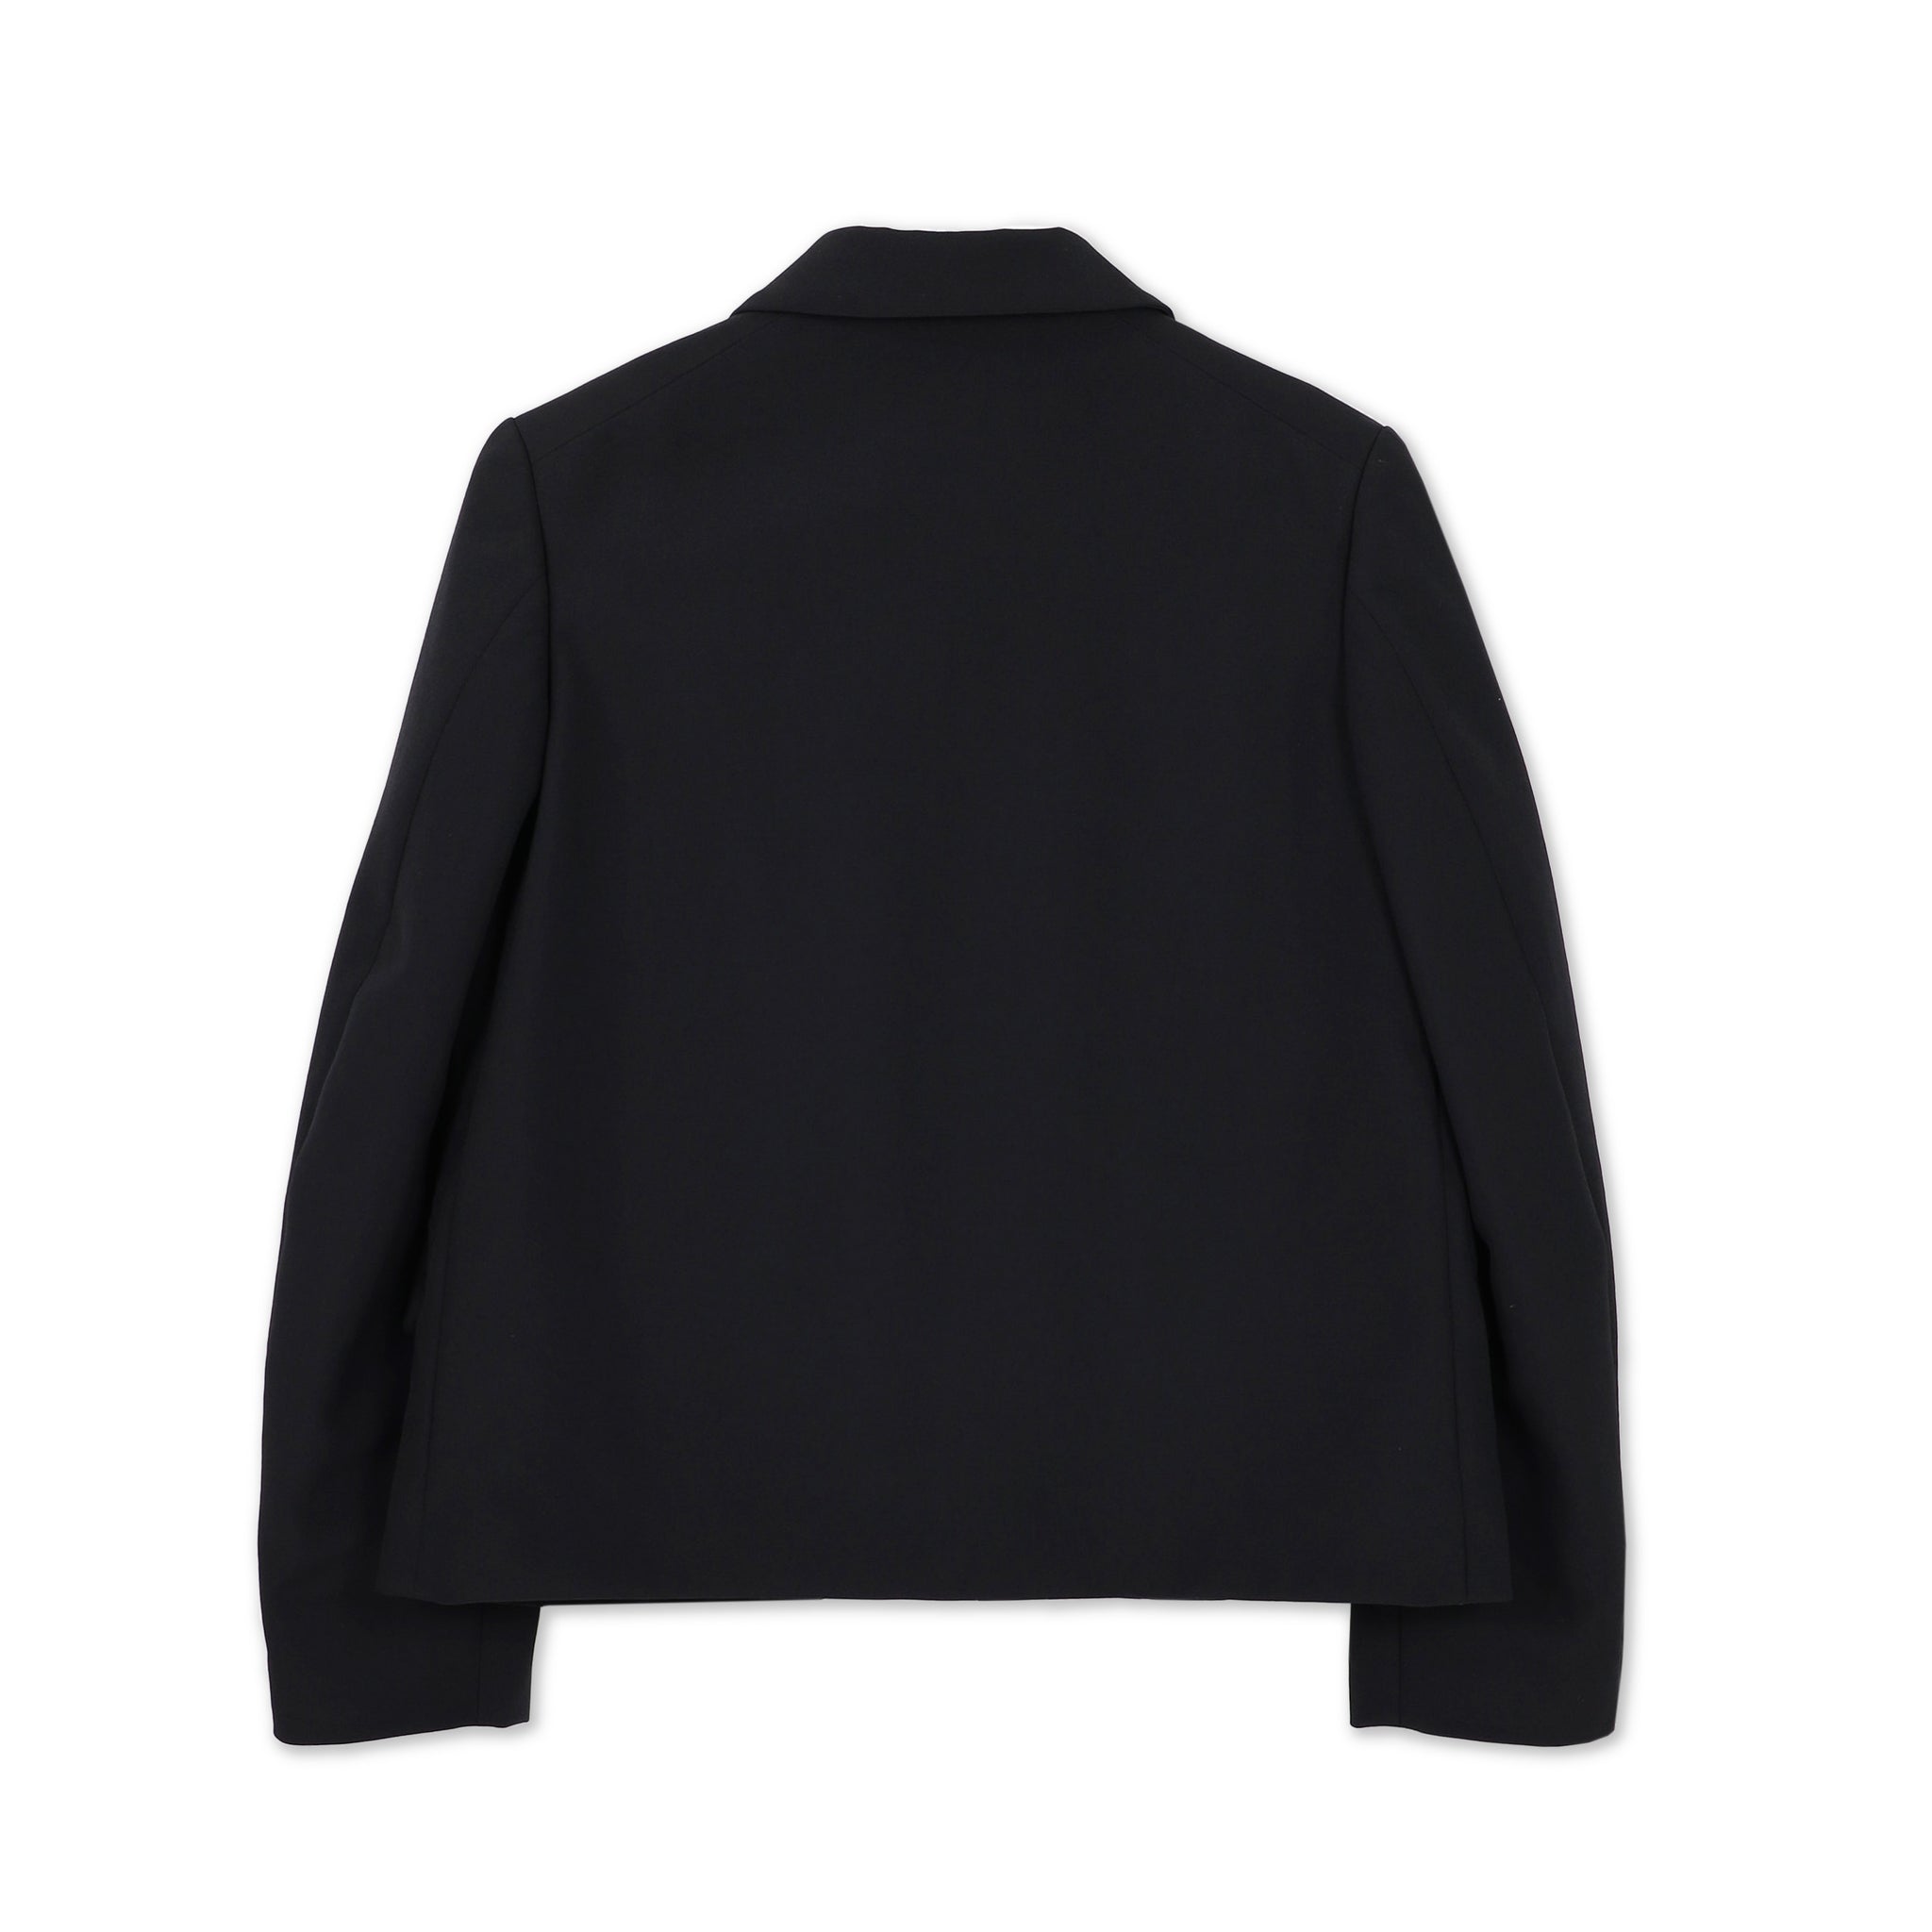 Black Wool Gabardine Lapel Jacket with Flap Pockets